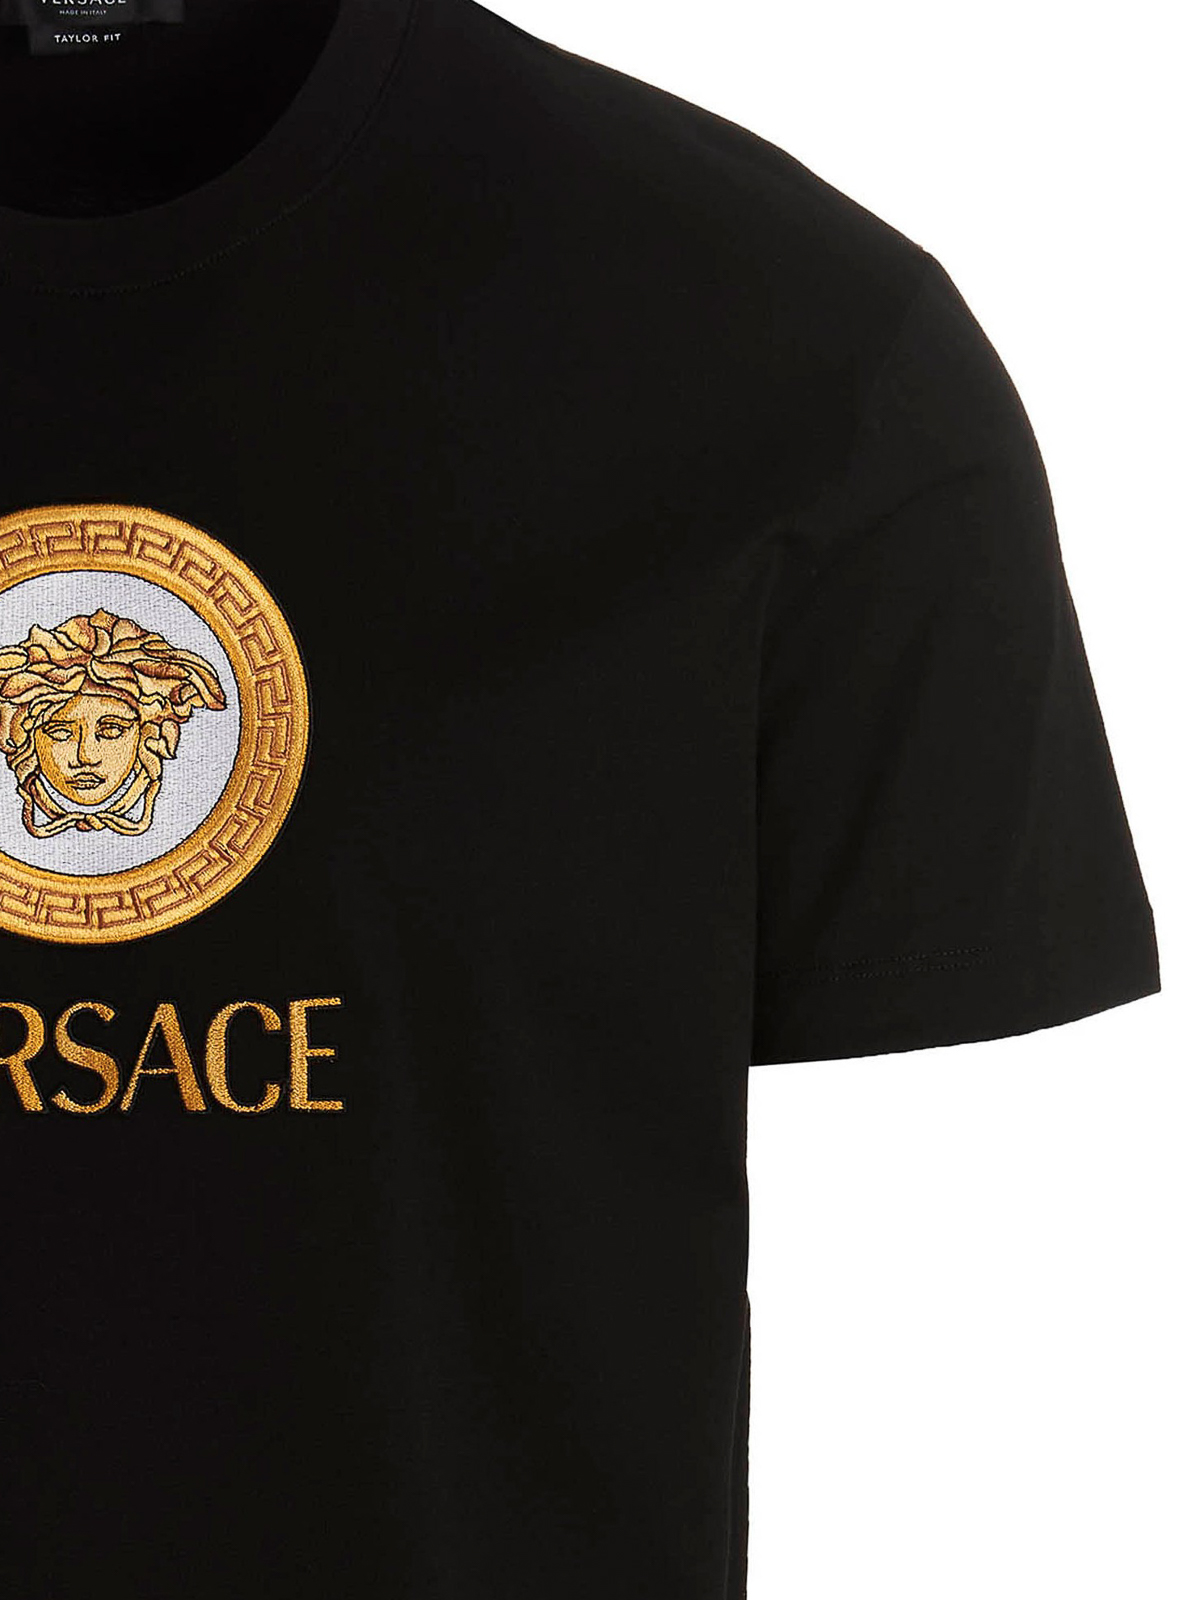 versace t shirts men price